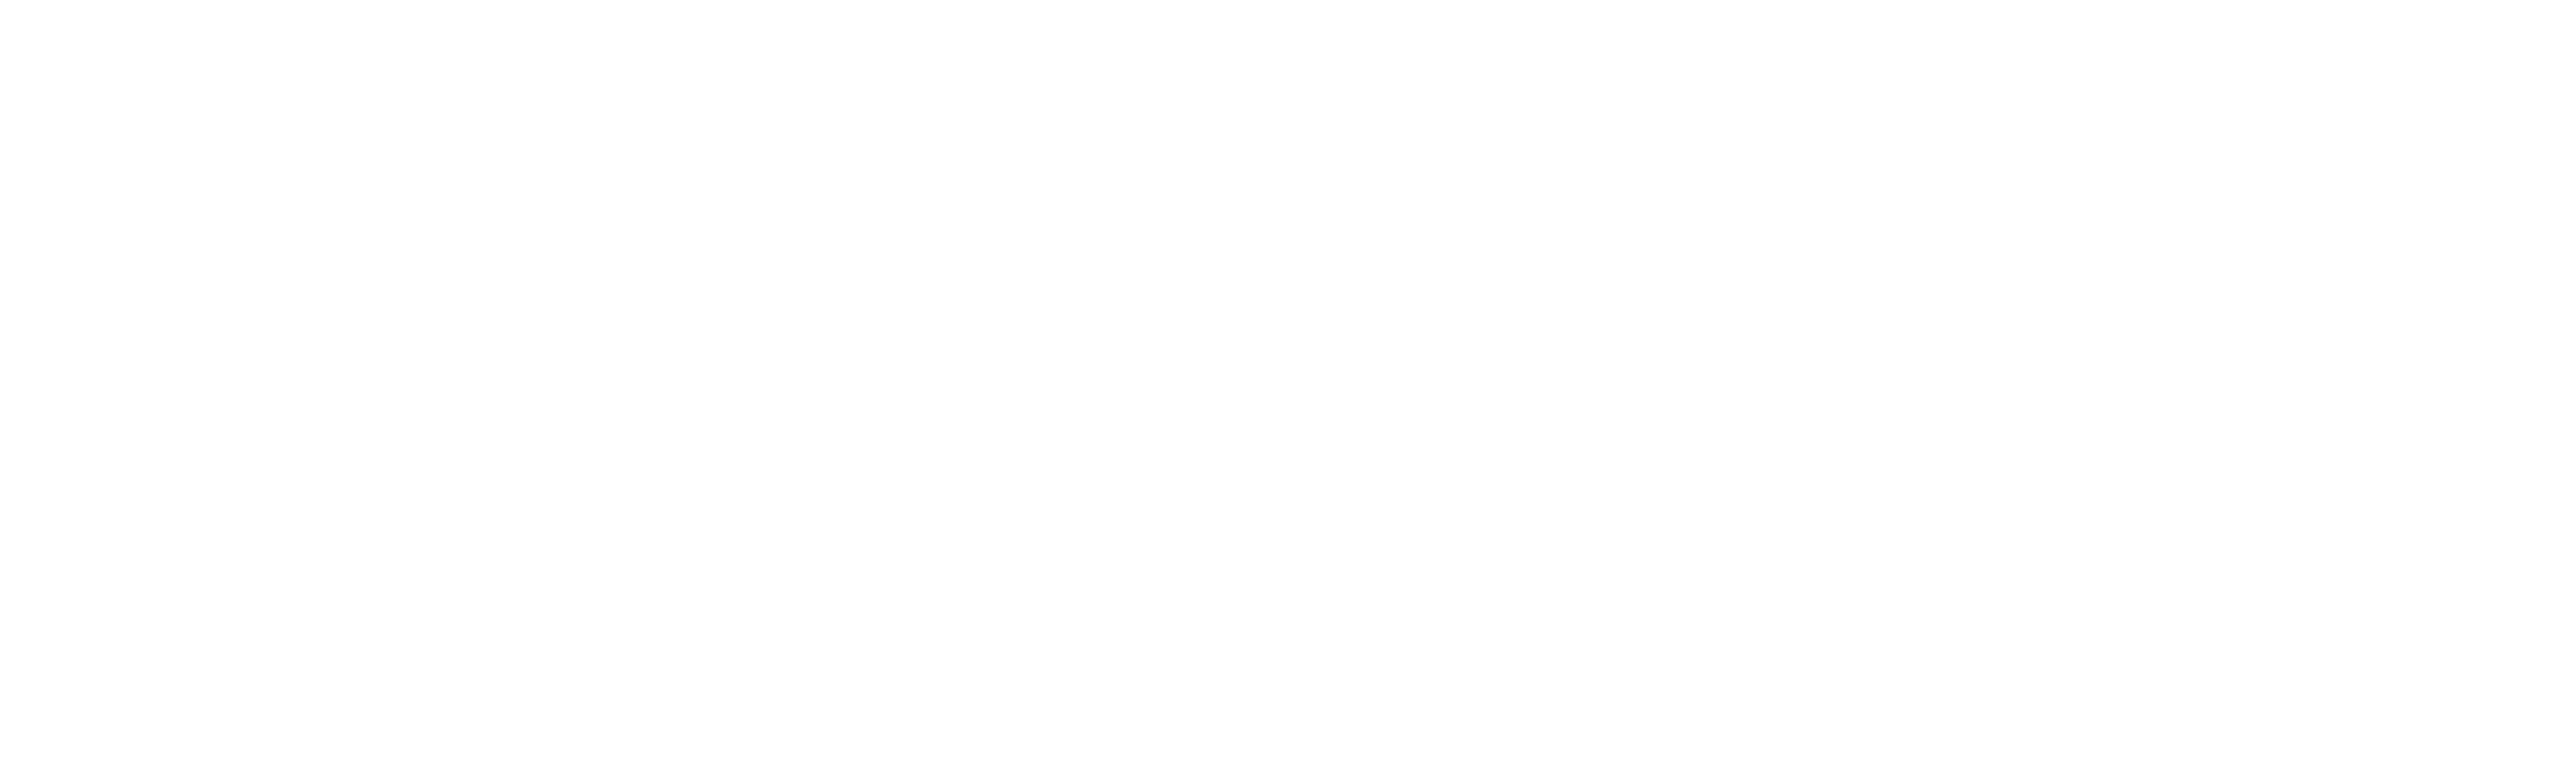 PinnacleCreative Light Stacked Logo LG